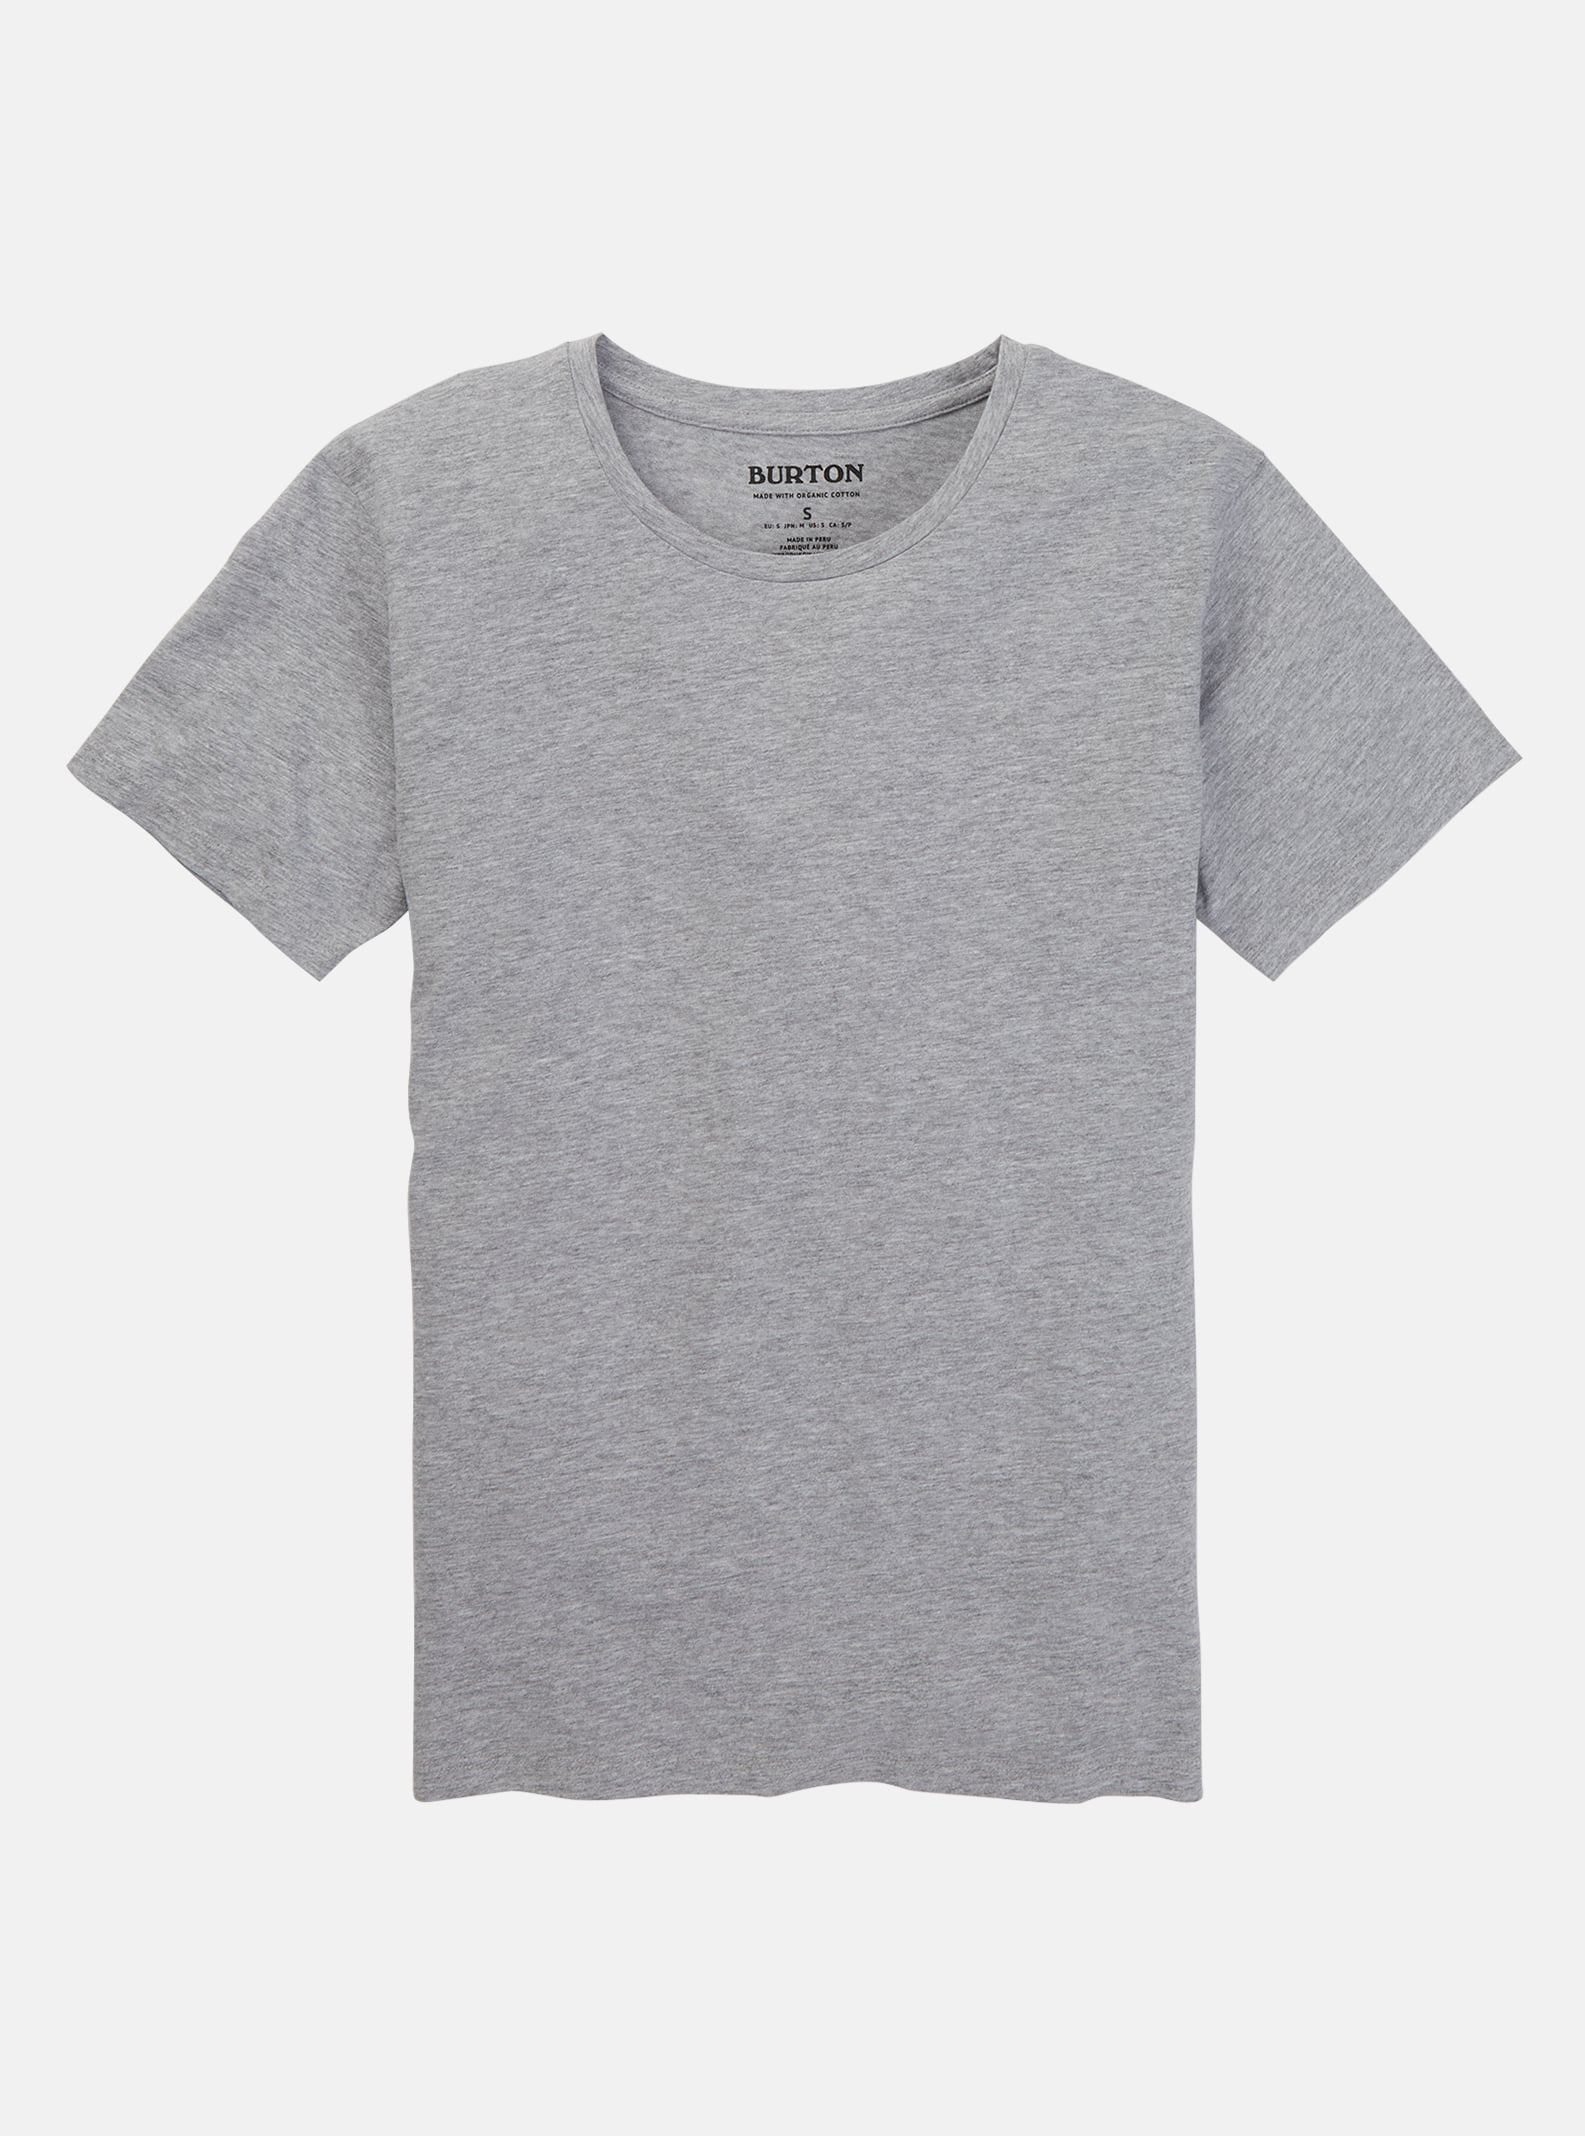 Burton Women's Classic Short Sleeve T-Shirt, Gray Heather, XL